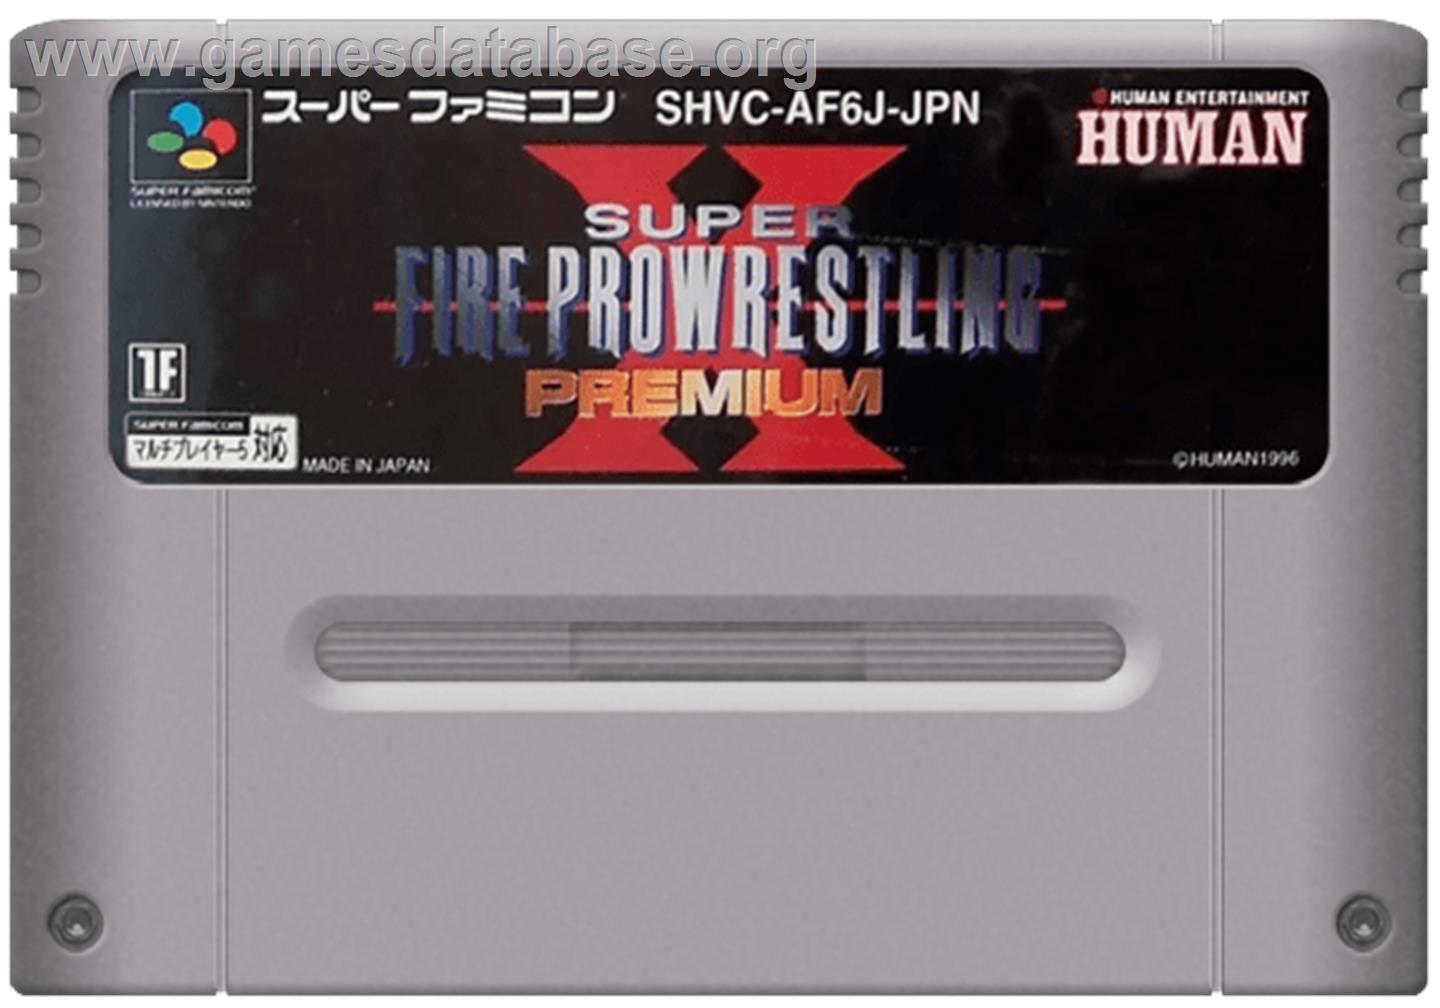 Super Fire Pro Wrestling Premium X - Nintendo SNES - Artwork - Cartridge